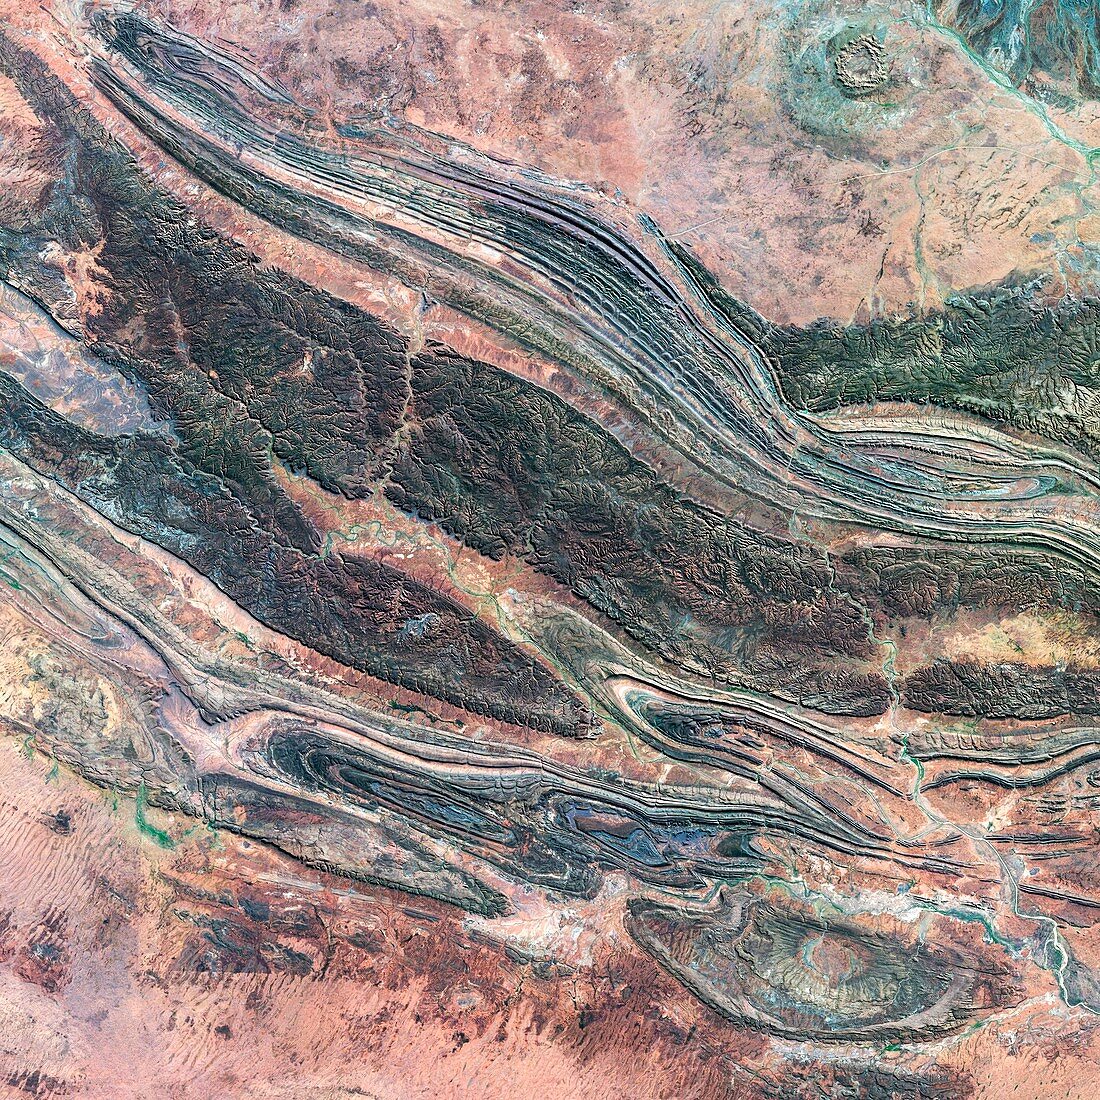 Kings Canyon,Australia,satellite image